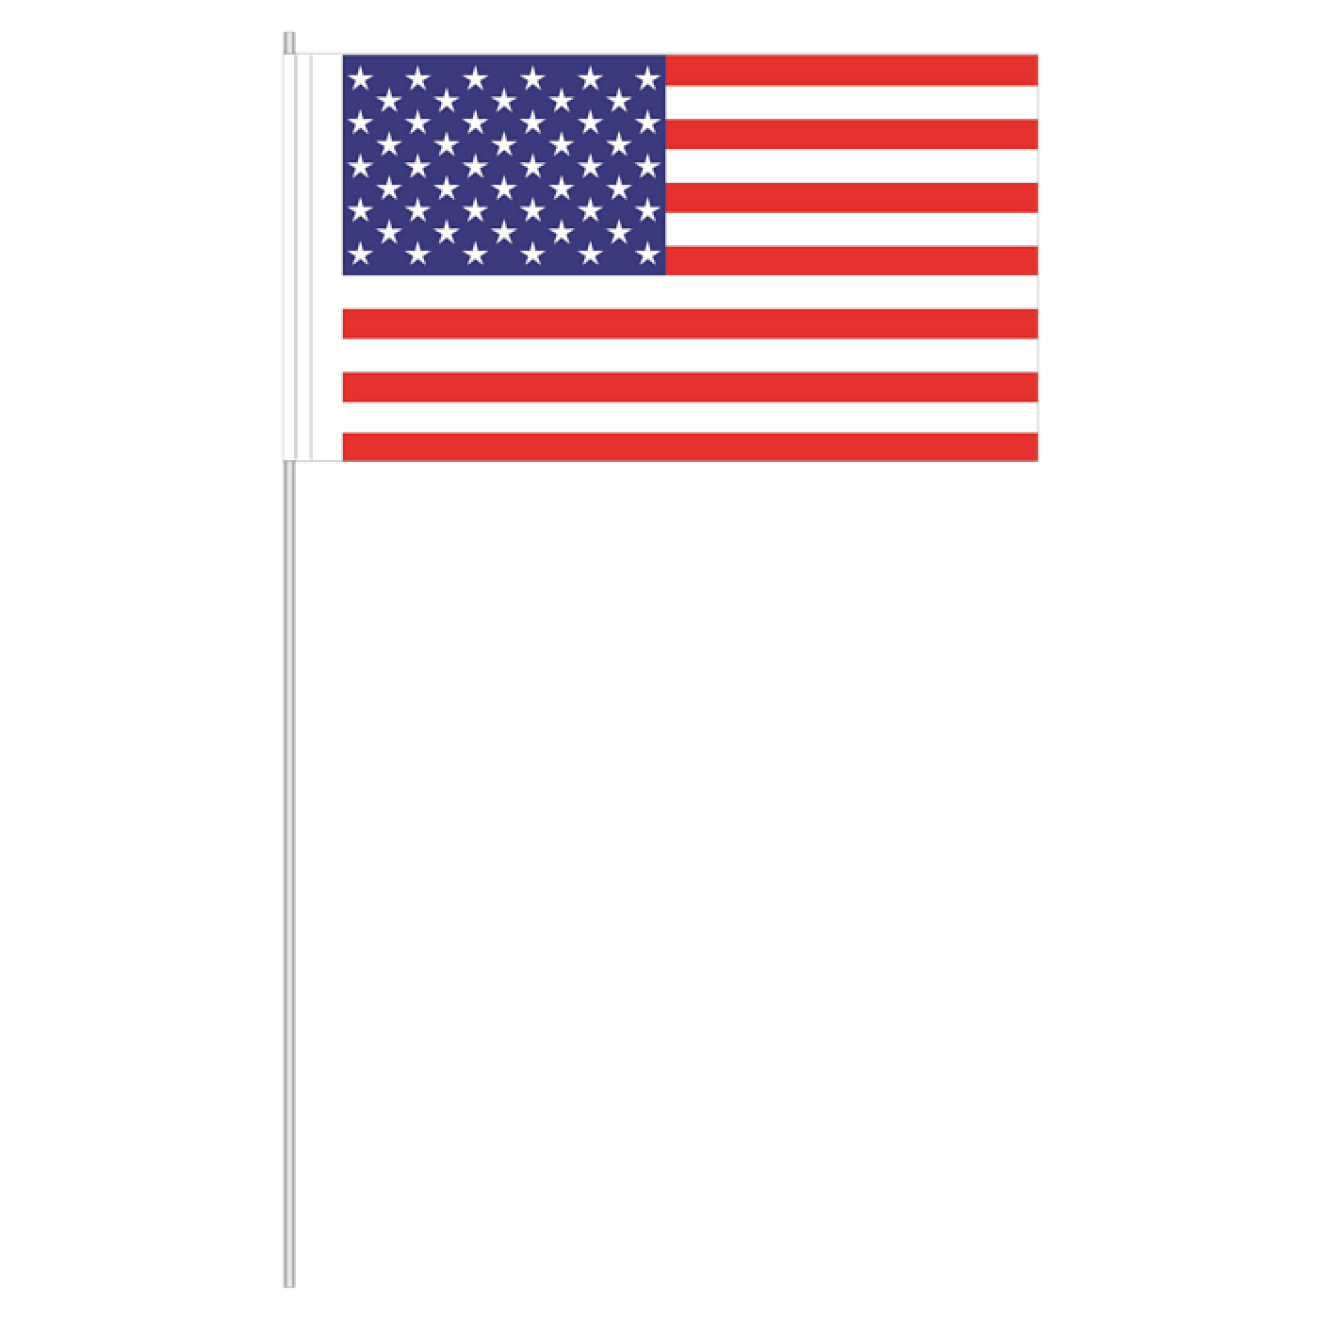 Papierfahnen Papierfähnchen Costa Rica Flagge Fahne